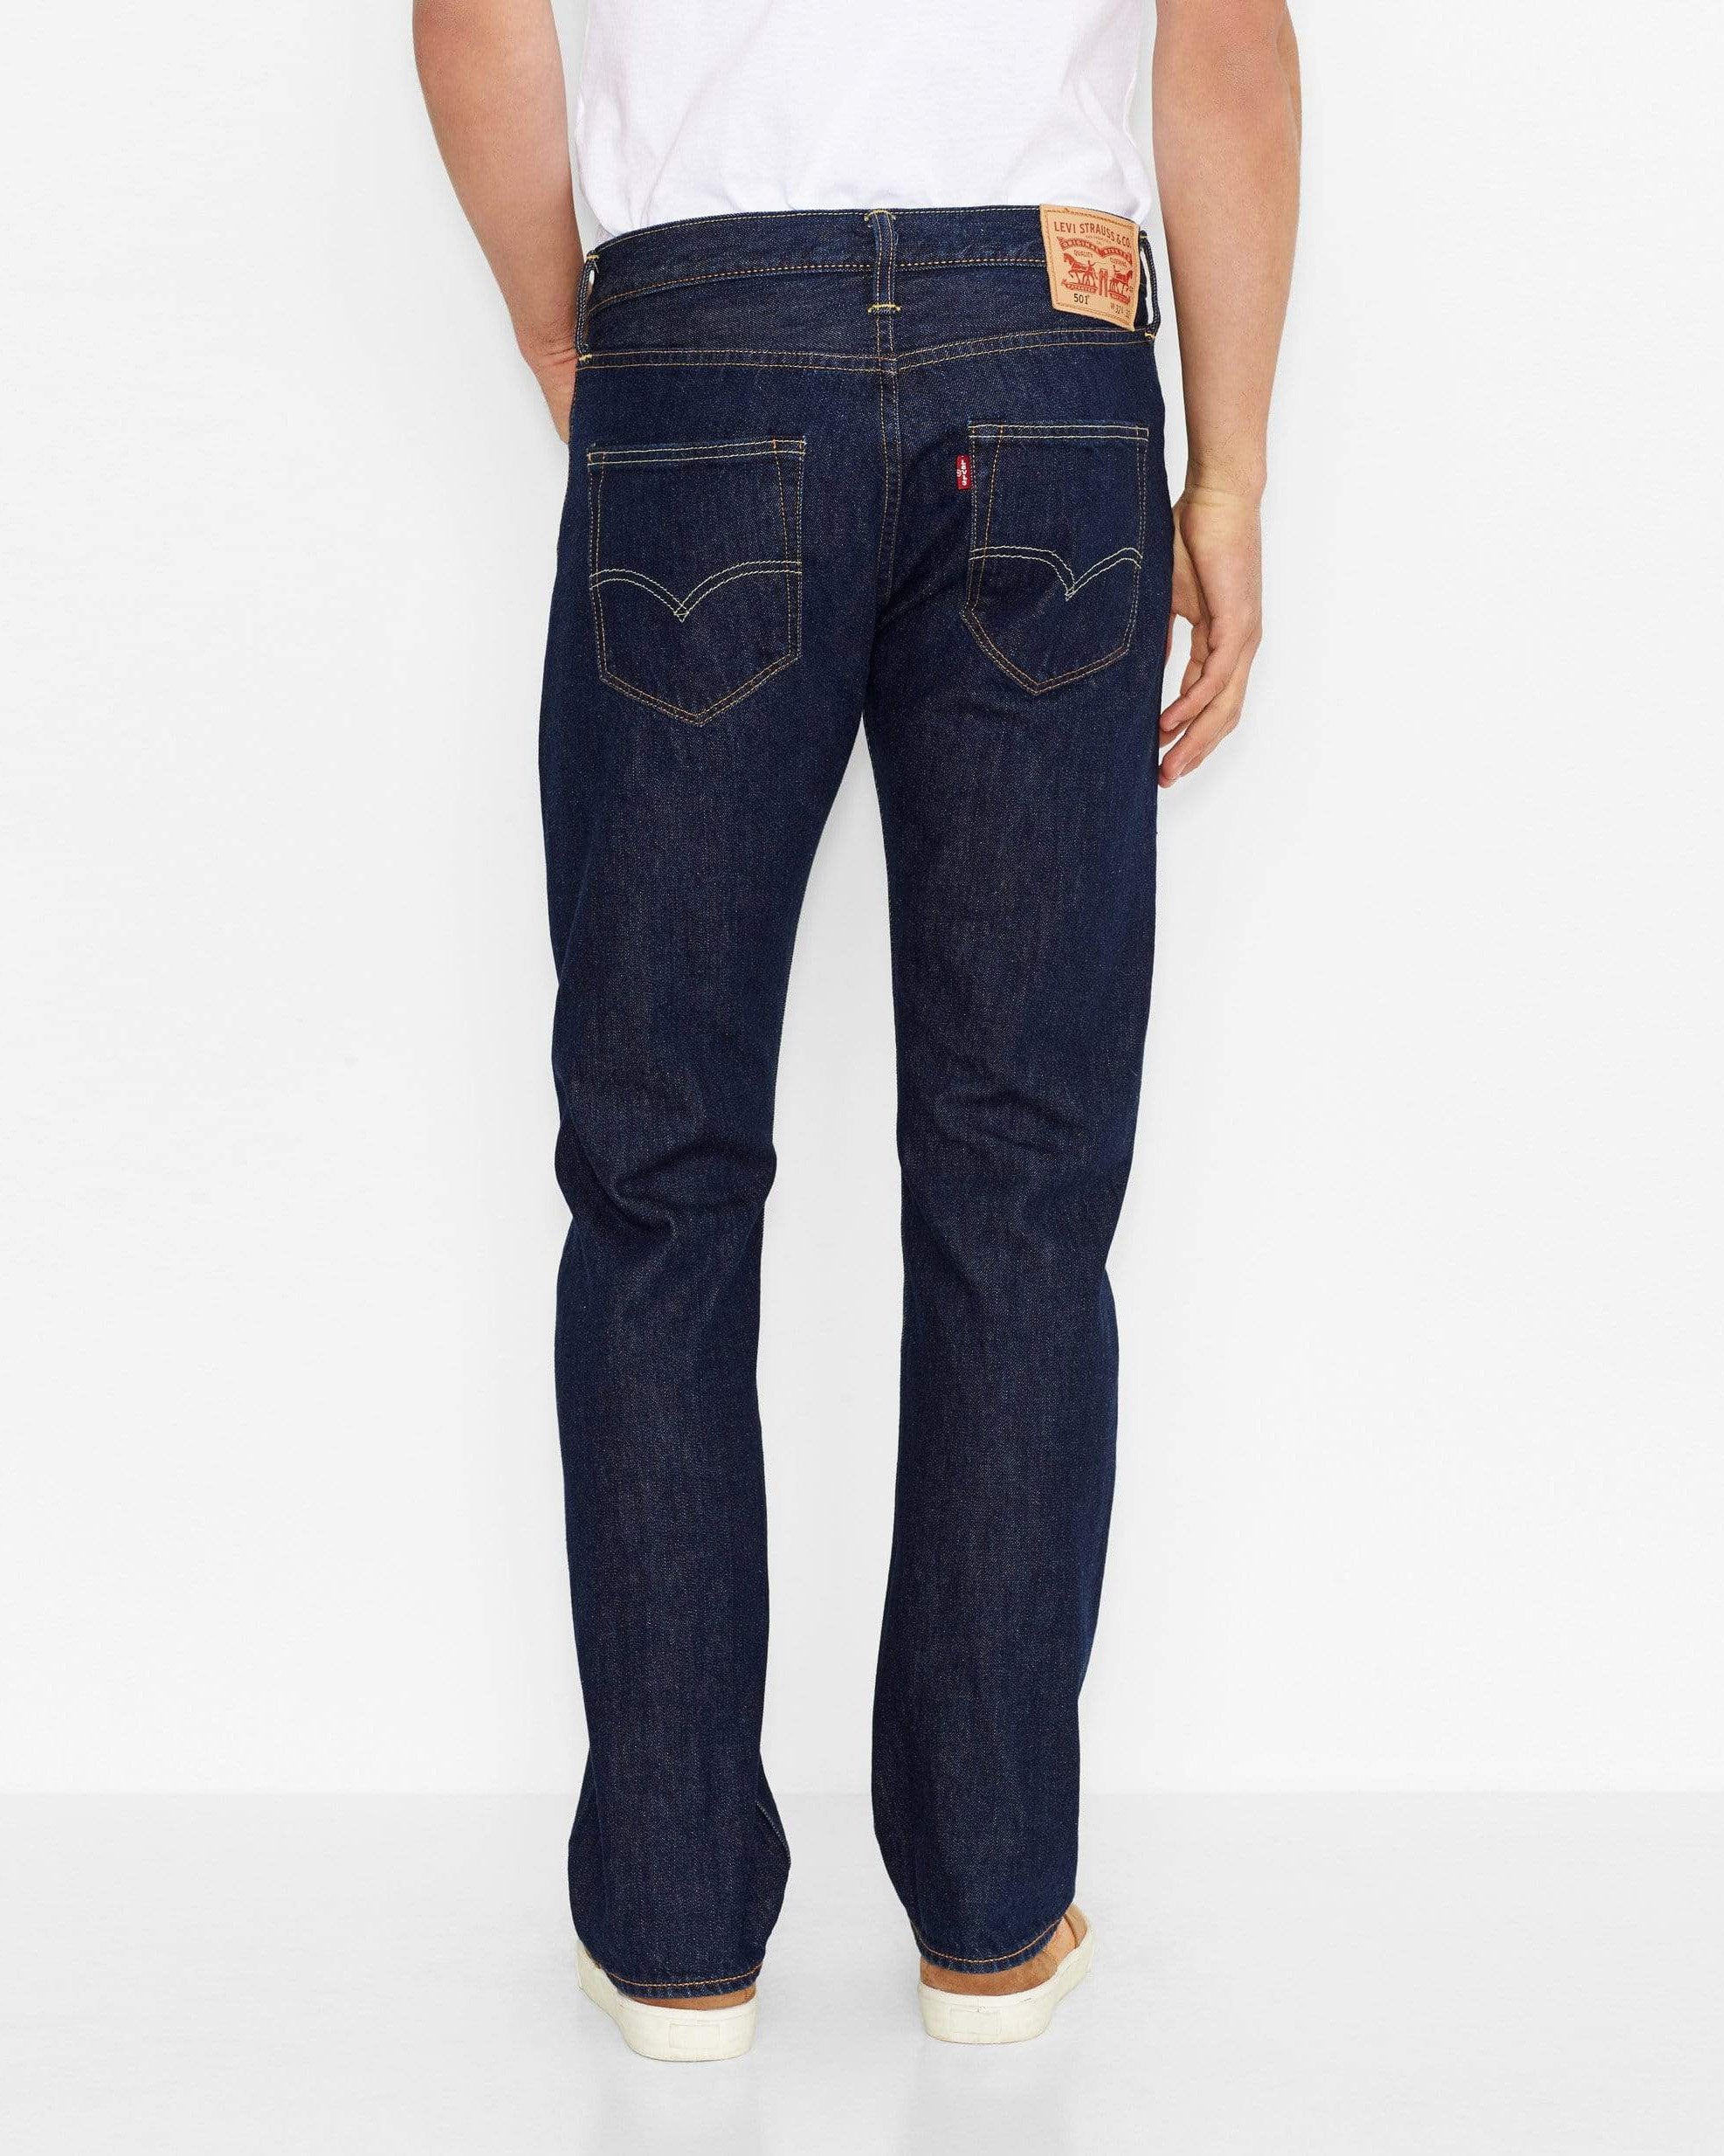 Levis 501 Original Regular Fit Mens Jeans - Onewash Blue - Jeans and ...